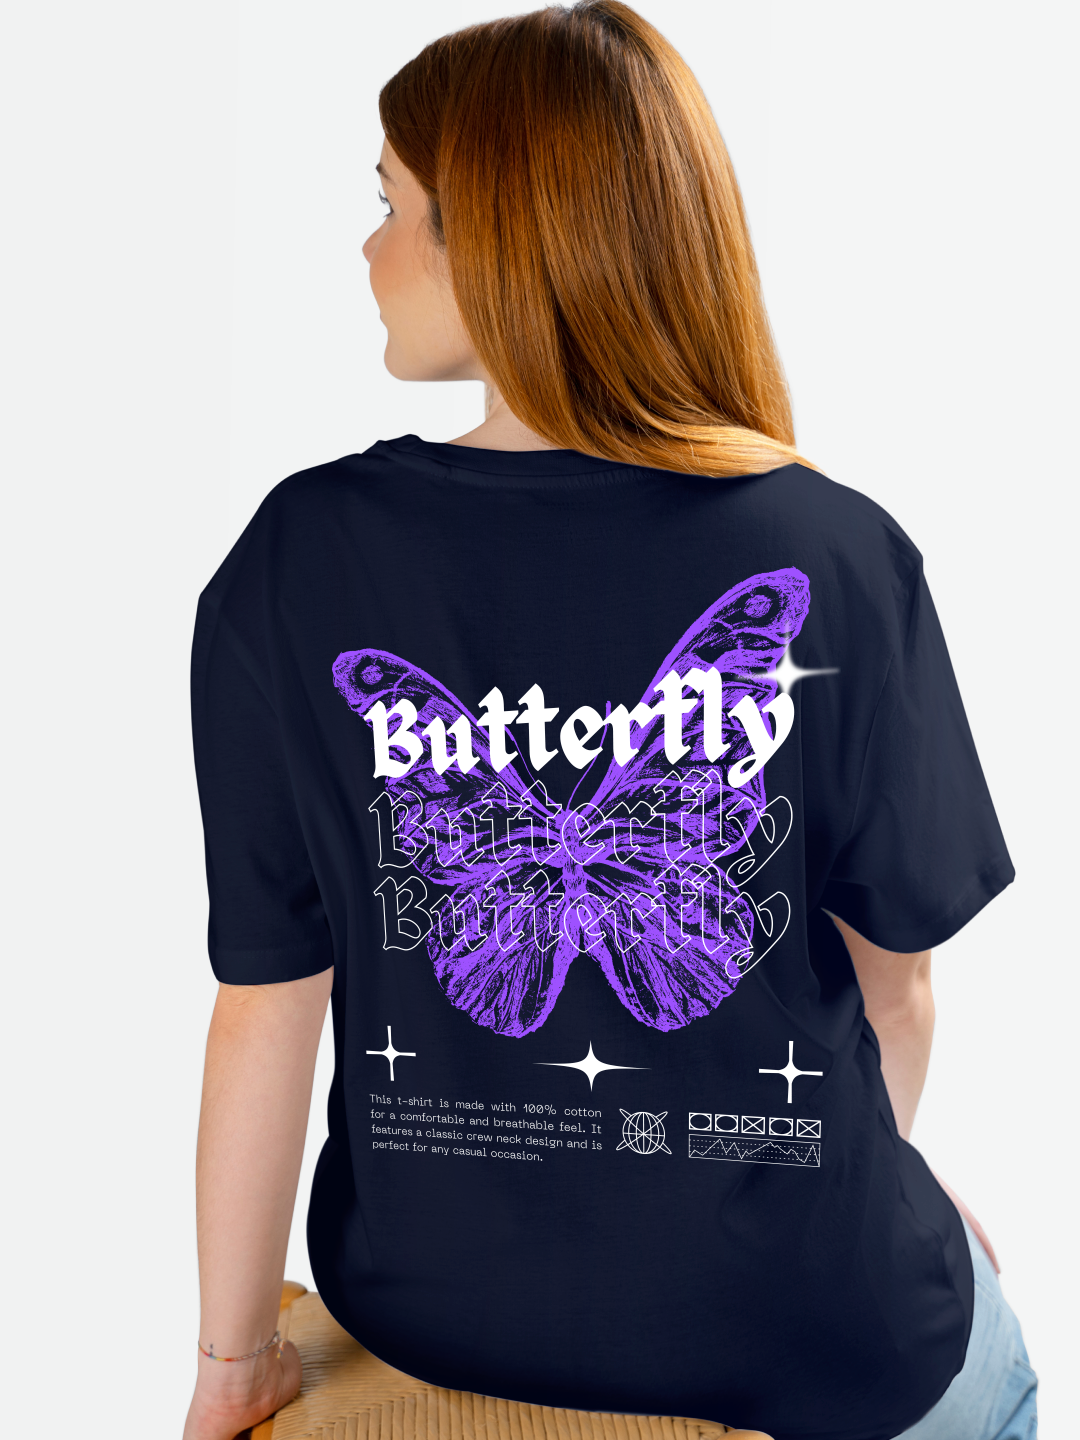 Butterfly Bliss Women's Tee – Navy Blue Edition